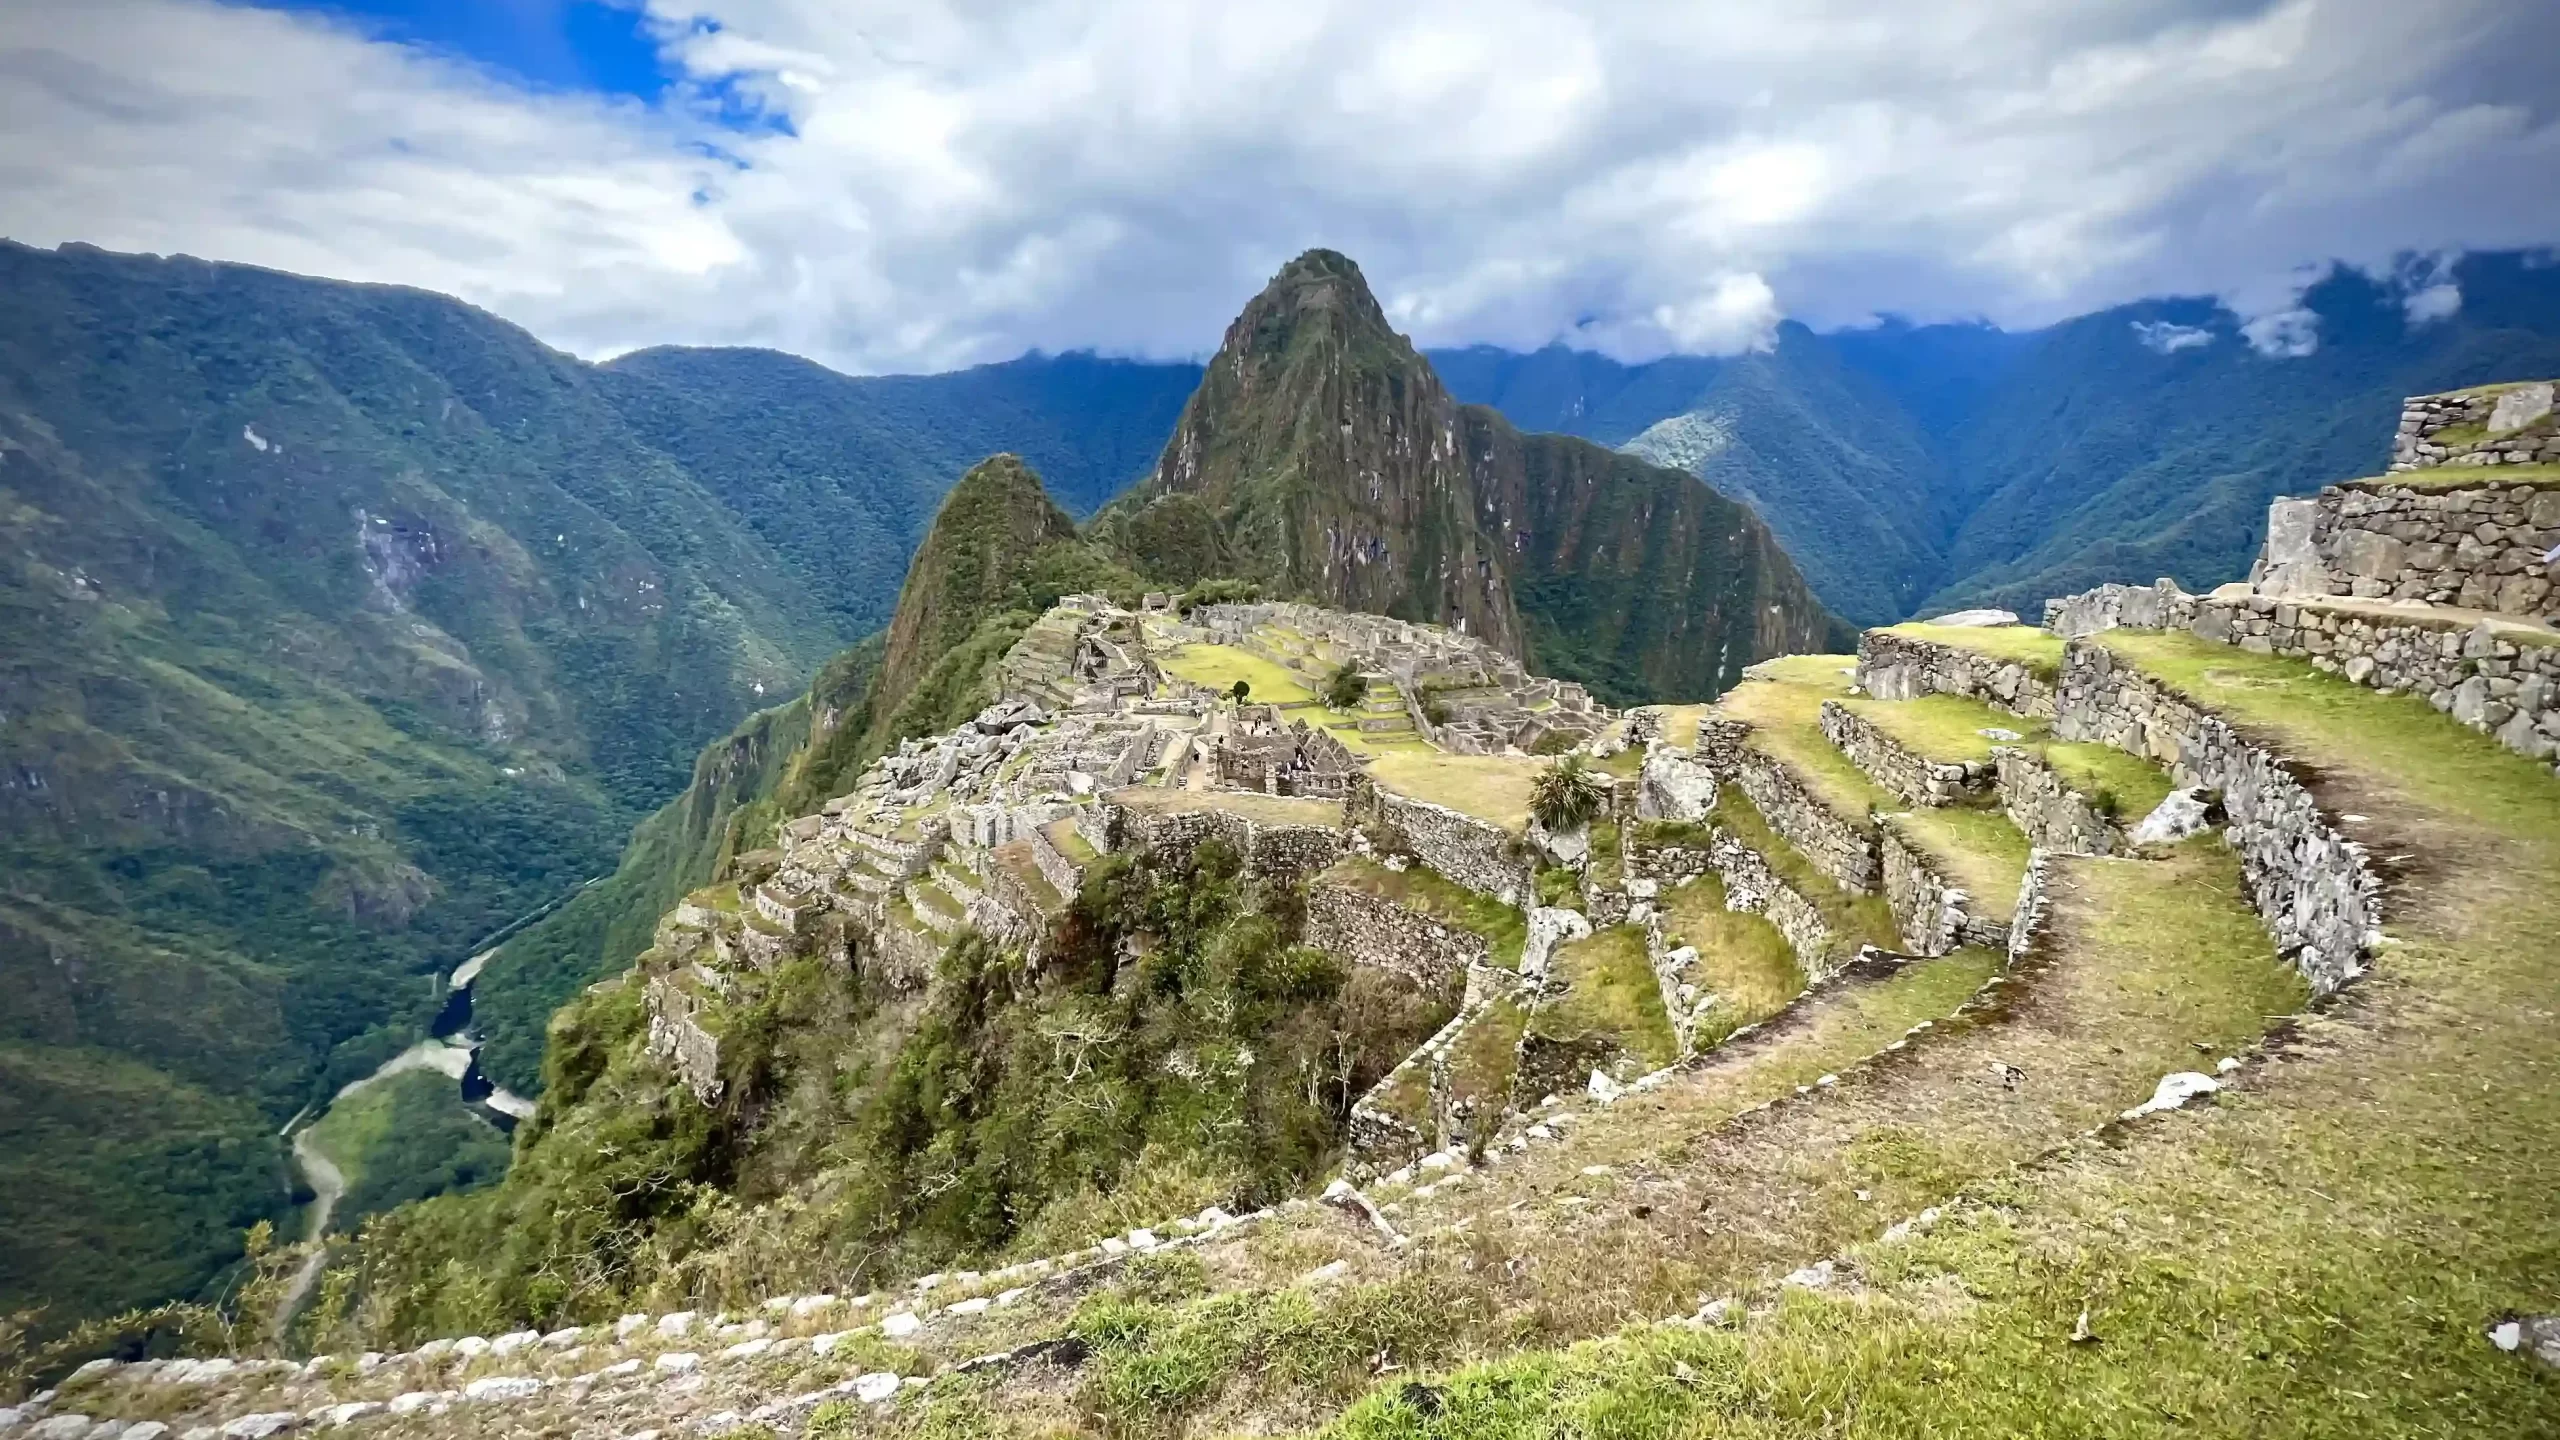 1 new 7th wonders of the World (Machu Picchu).